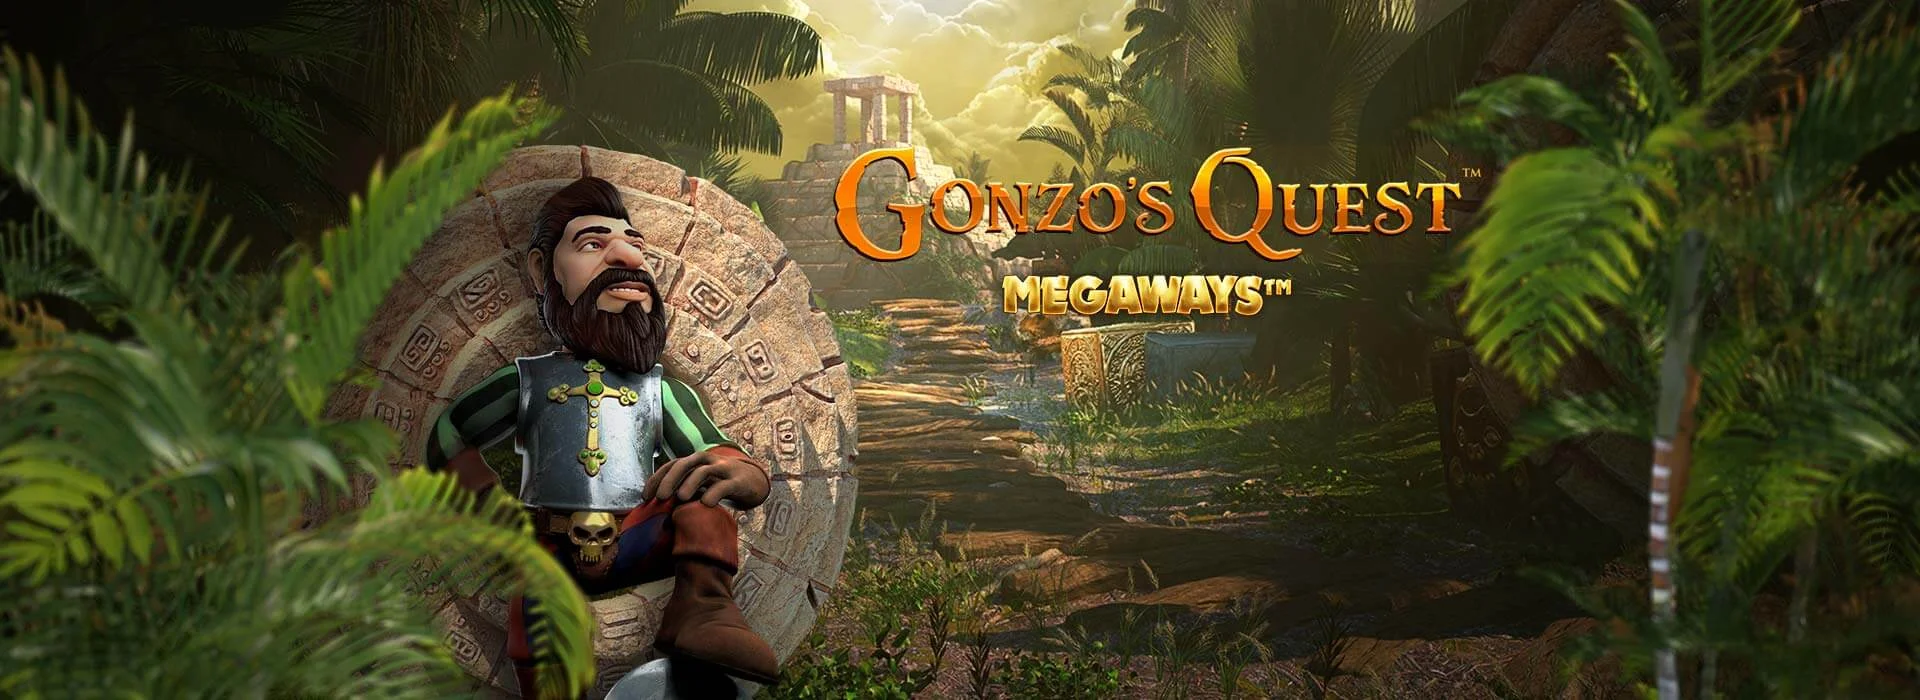 Online Slot Gonzo’s Quest Megaways | World Casino Expert